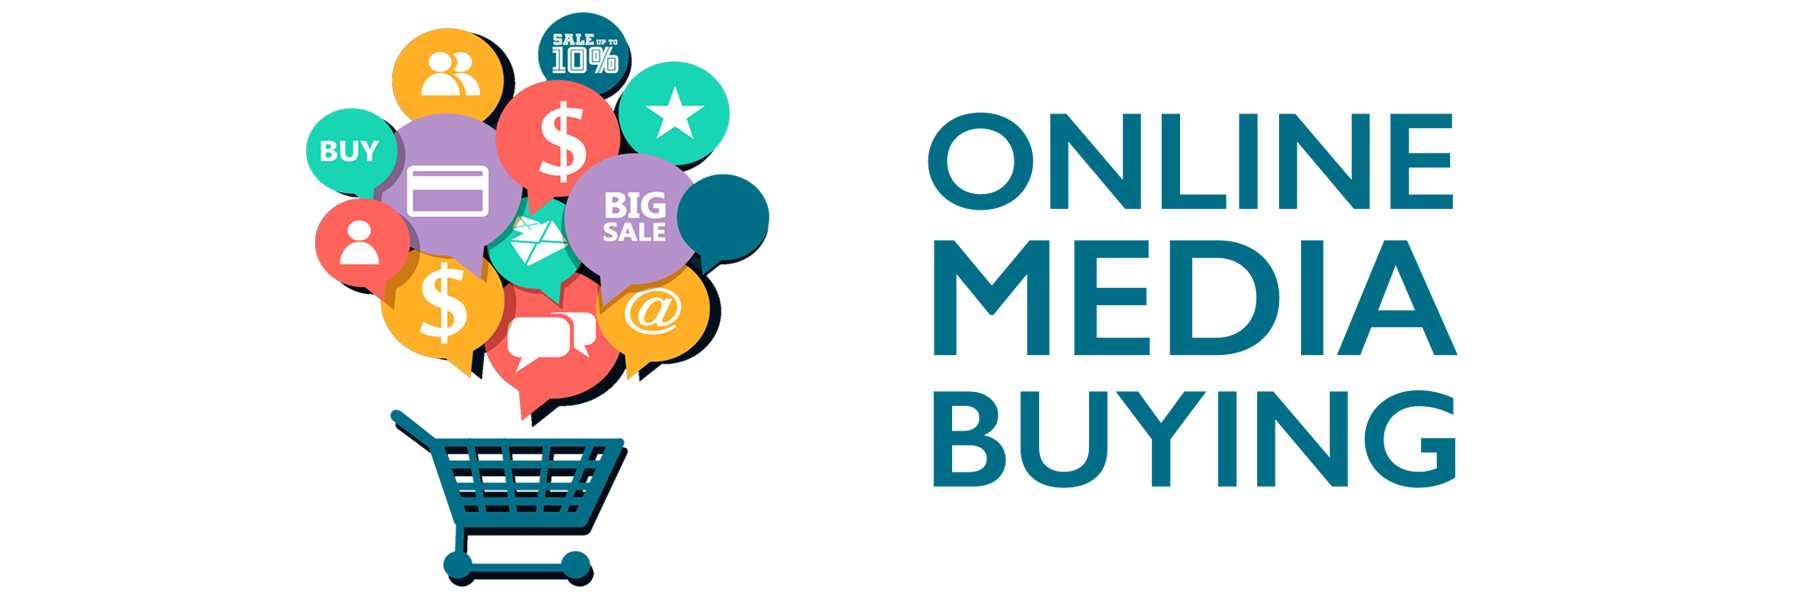 online-media-buying_digital_africa_Masterclass